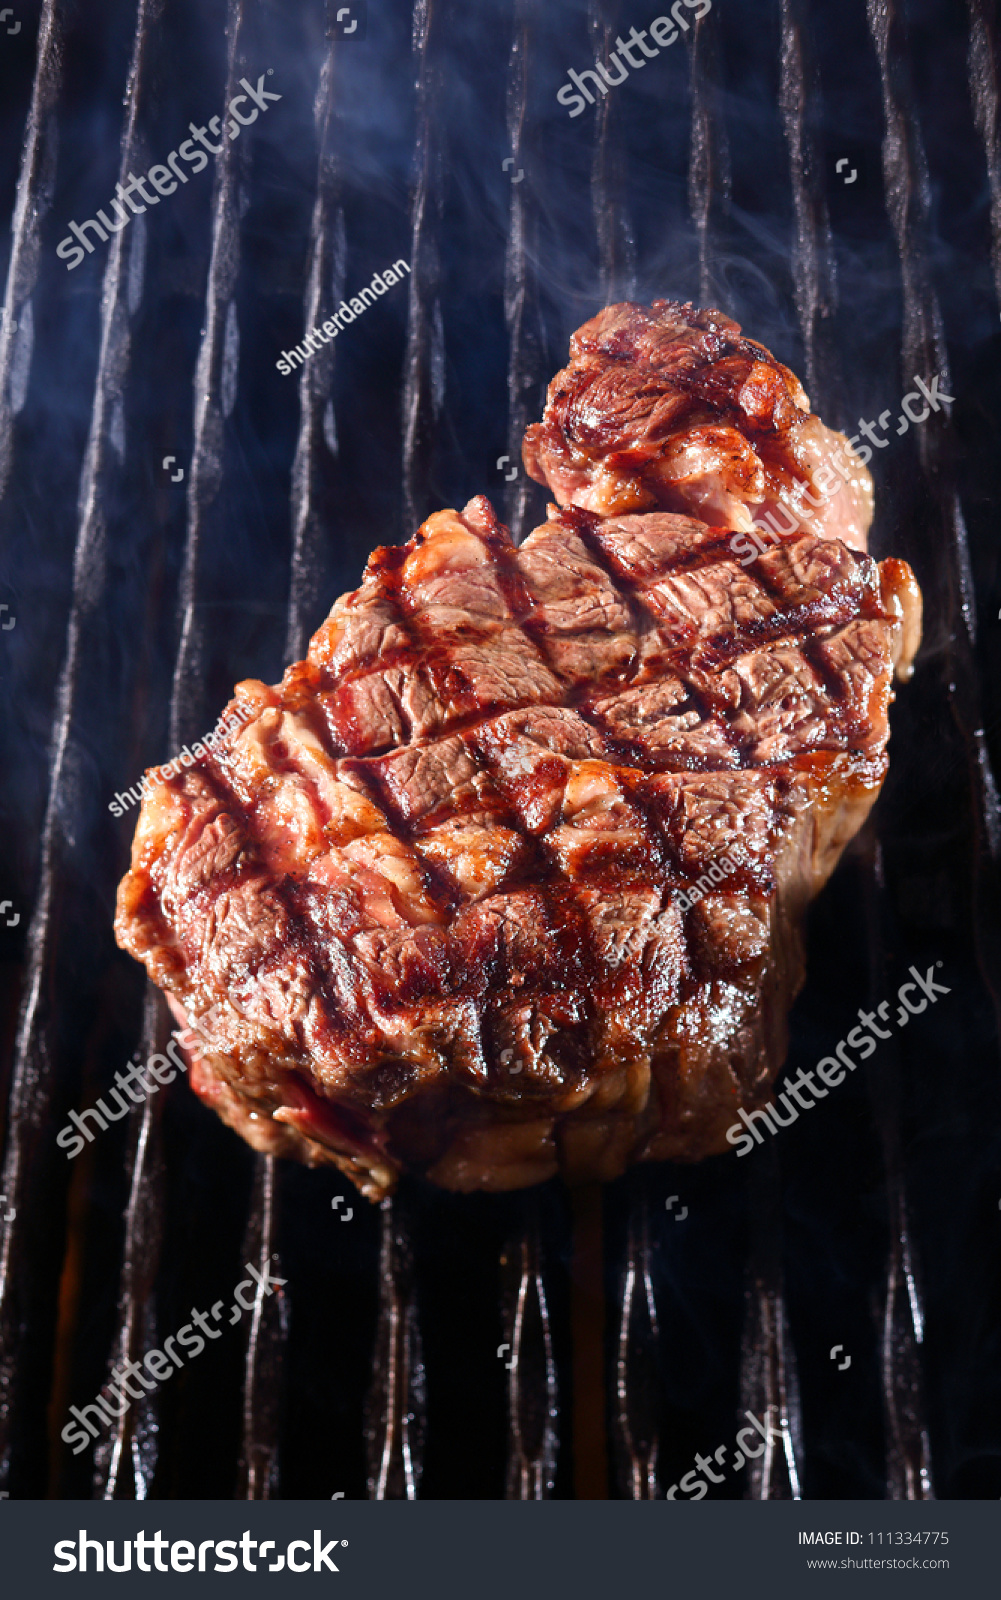 juicy steak on the grill #111334775